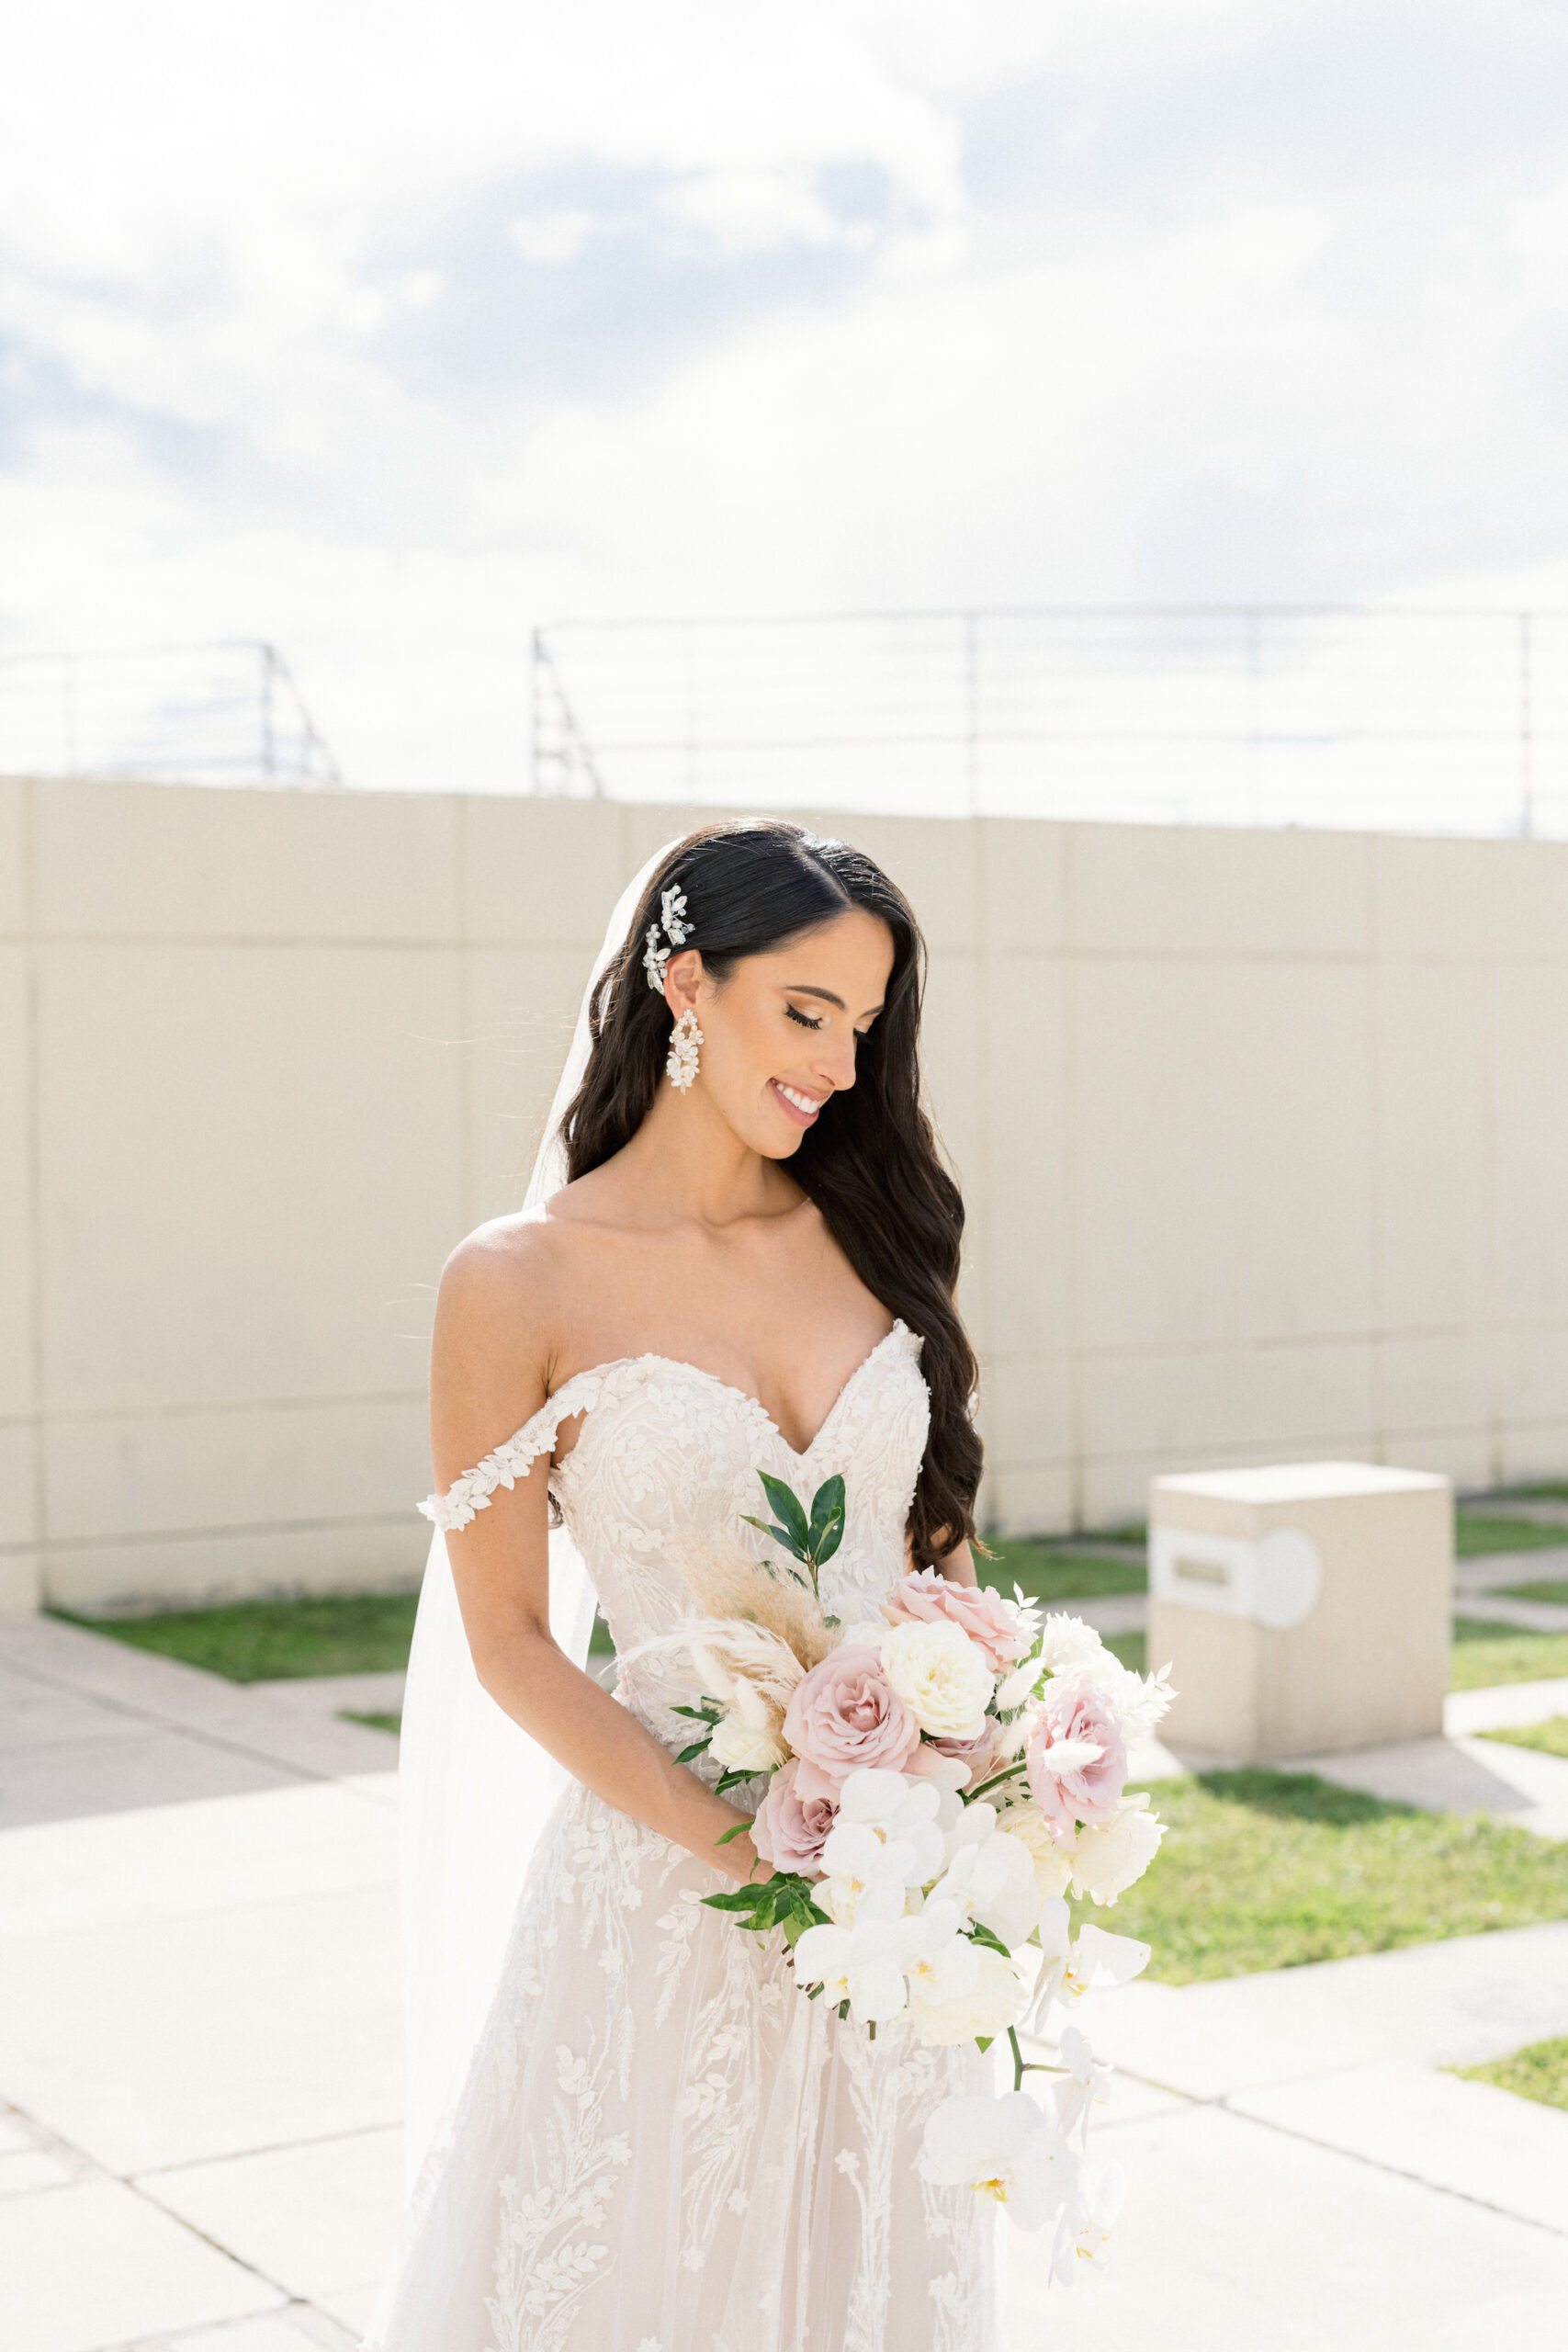 Outdoor Bridal Glamour Wedding Portrait | Tampa Bay Photographer Dewitt for Love